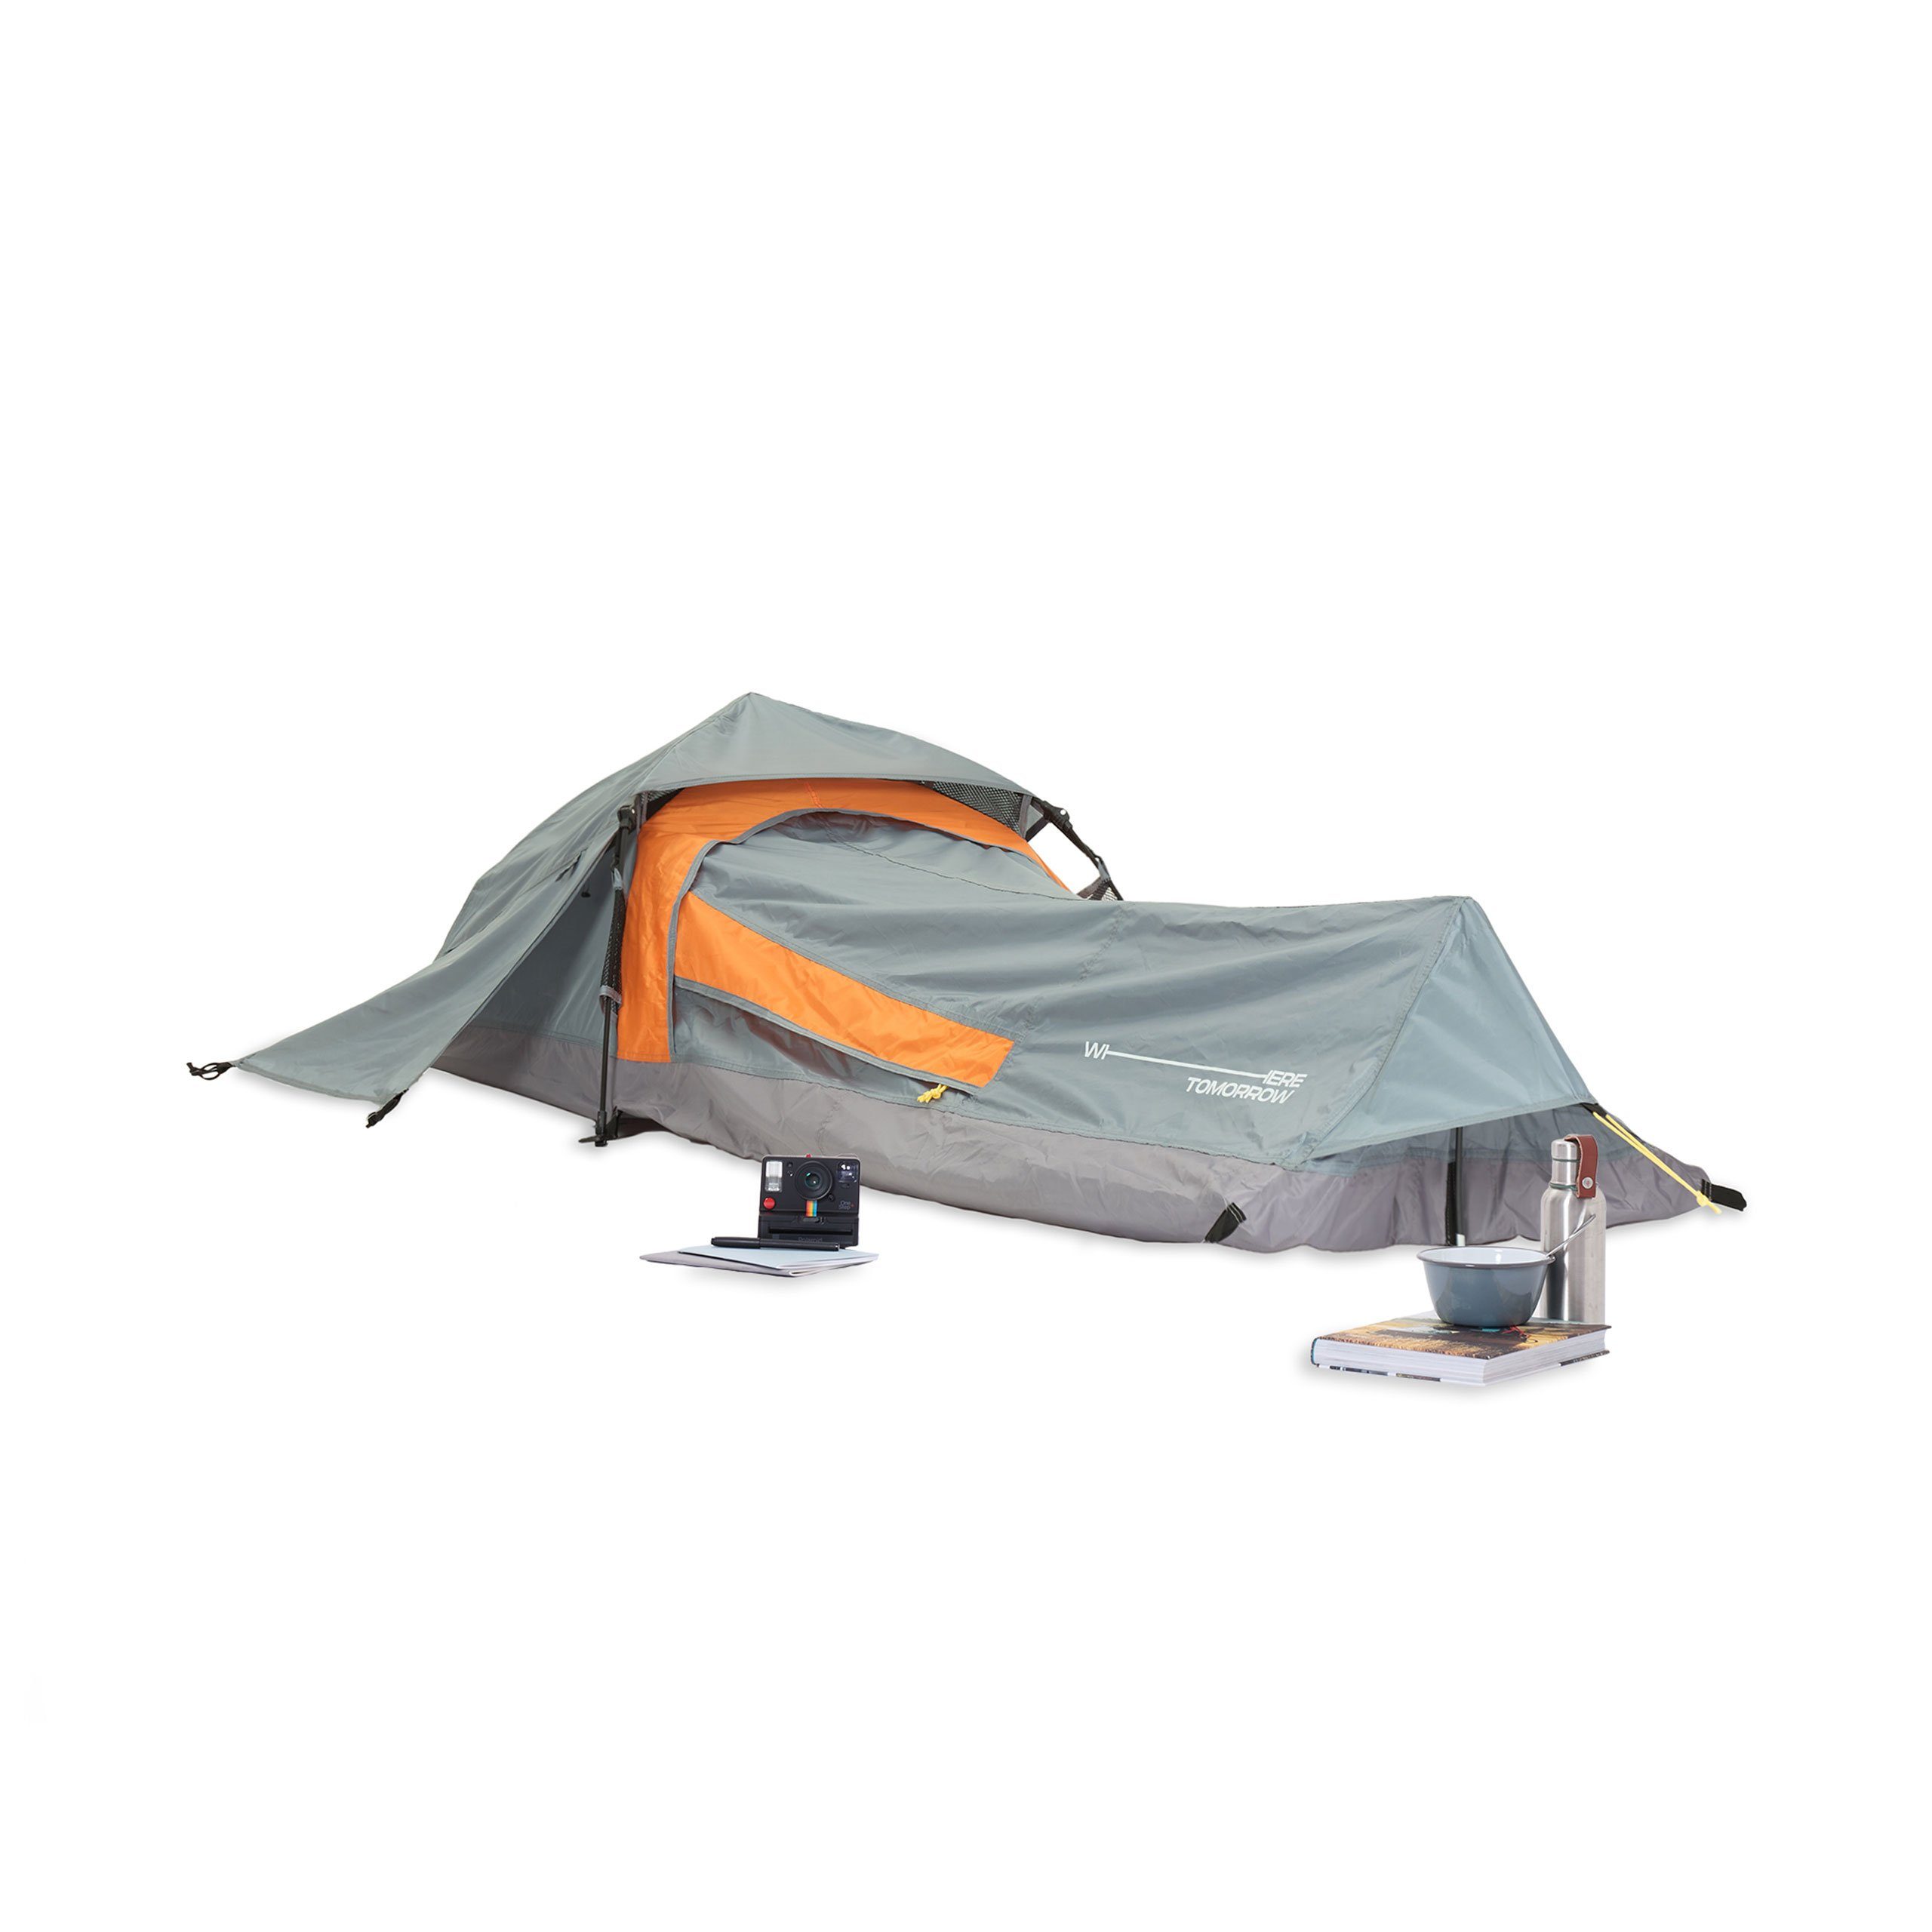 Camping Zelt Orange/Grau Outdoor Zelt Schirmsystem Kuppelzelt bis zu 3 Personen 